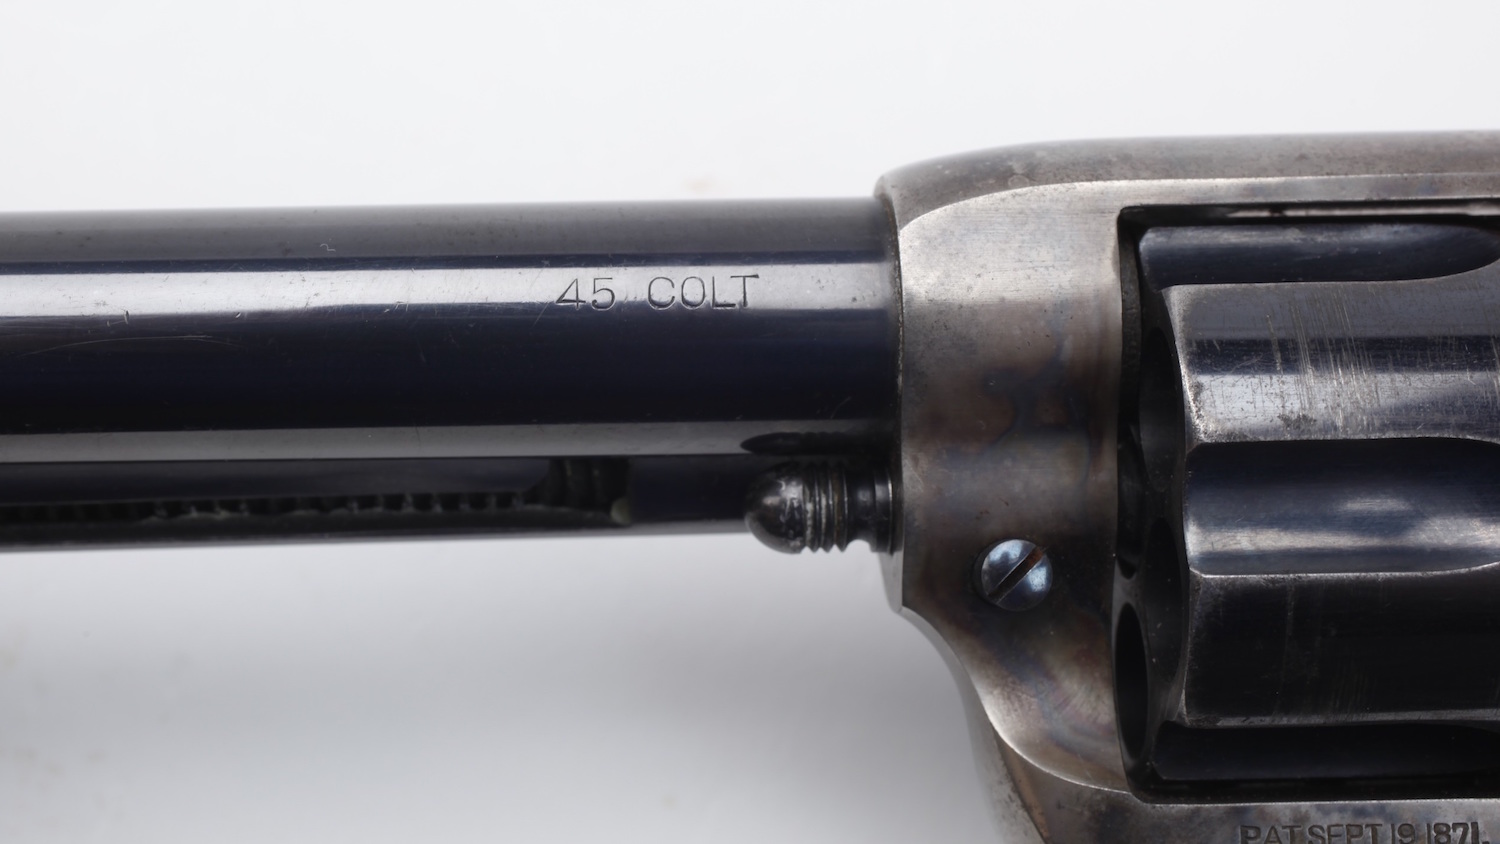 History in a Handgun: Erle Stanley Gardner’s Colt Single Action Army